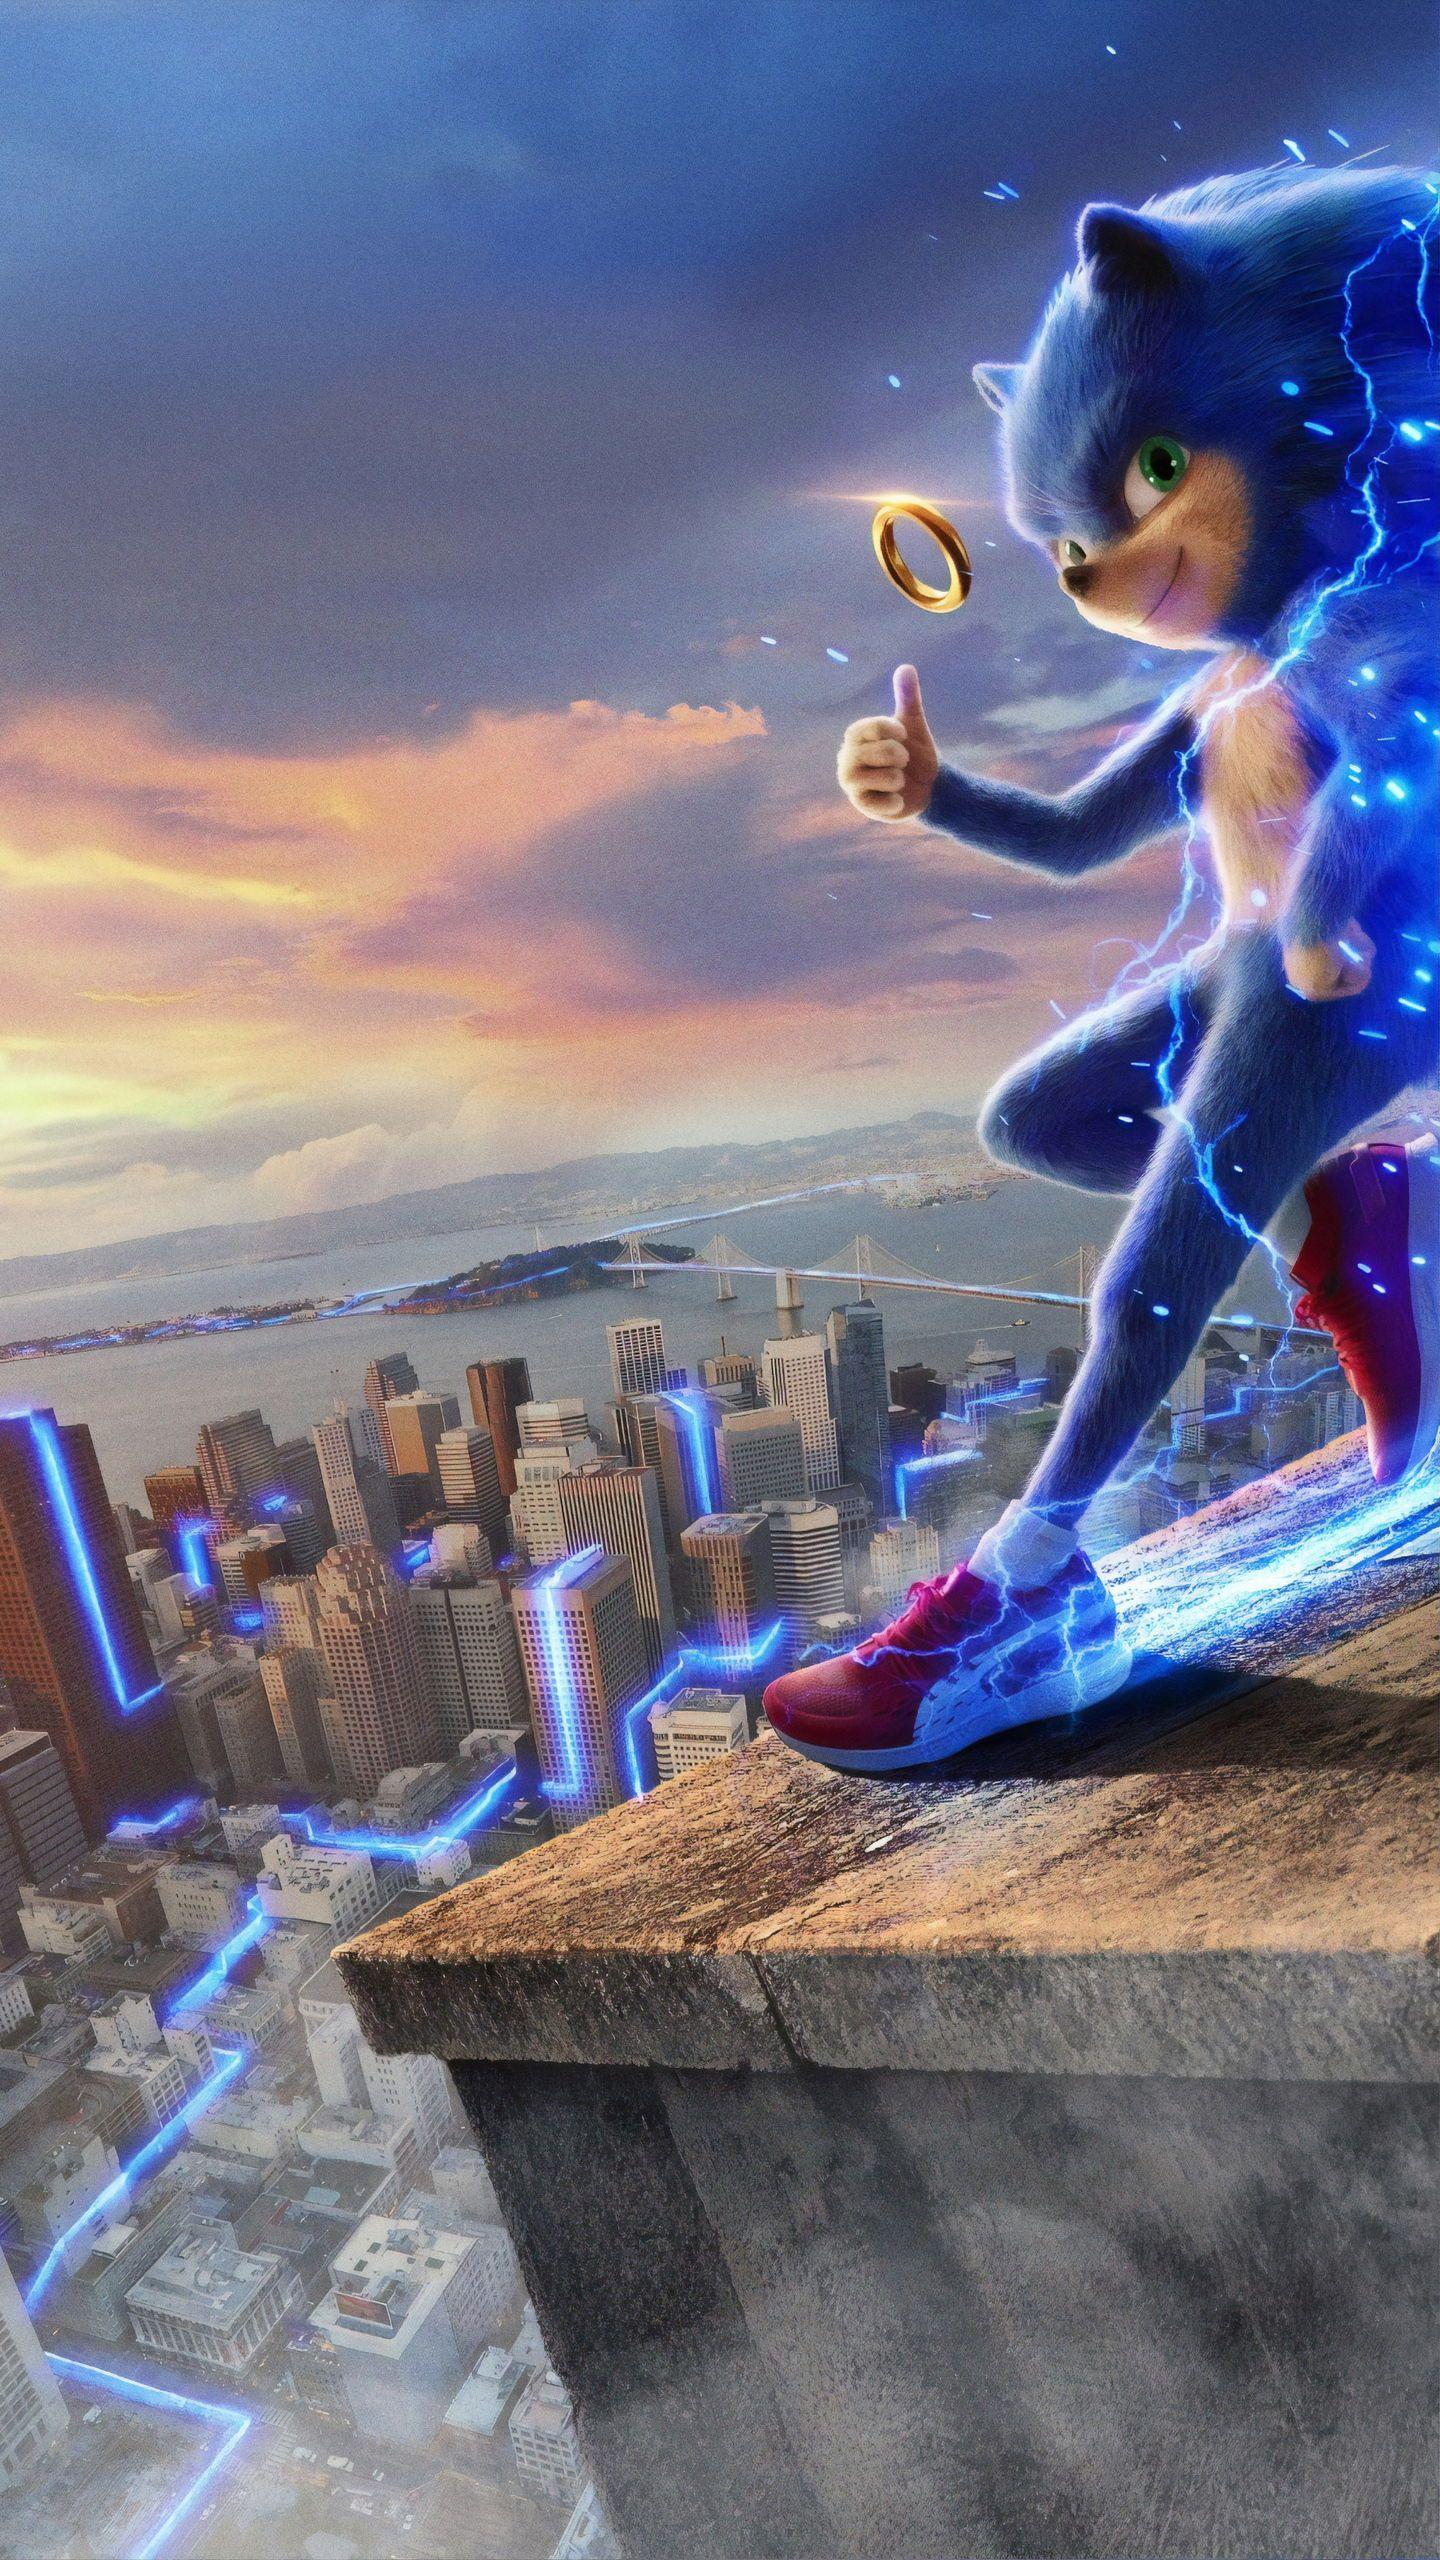 Sonic the Hedgehog Wallpaper. #sonic #wallpaper #poster